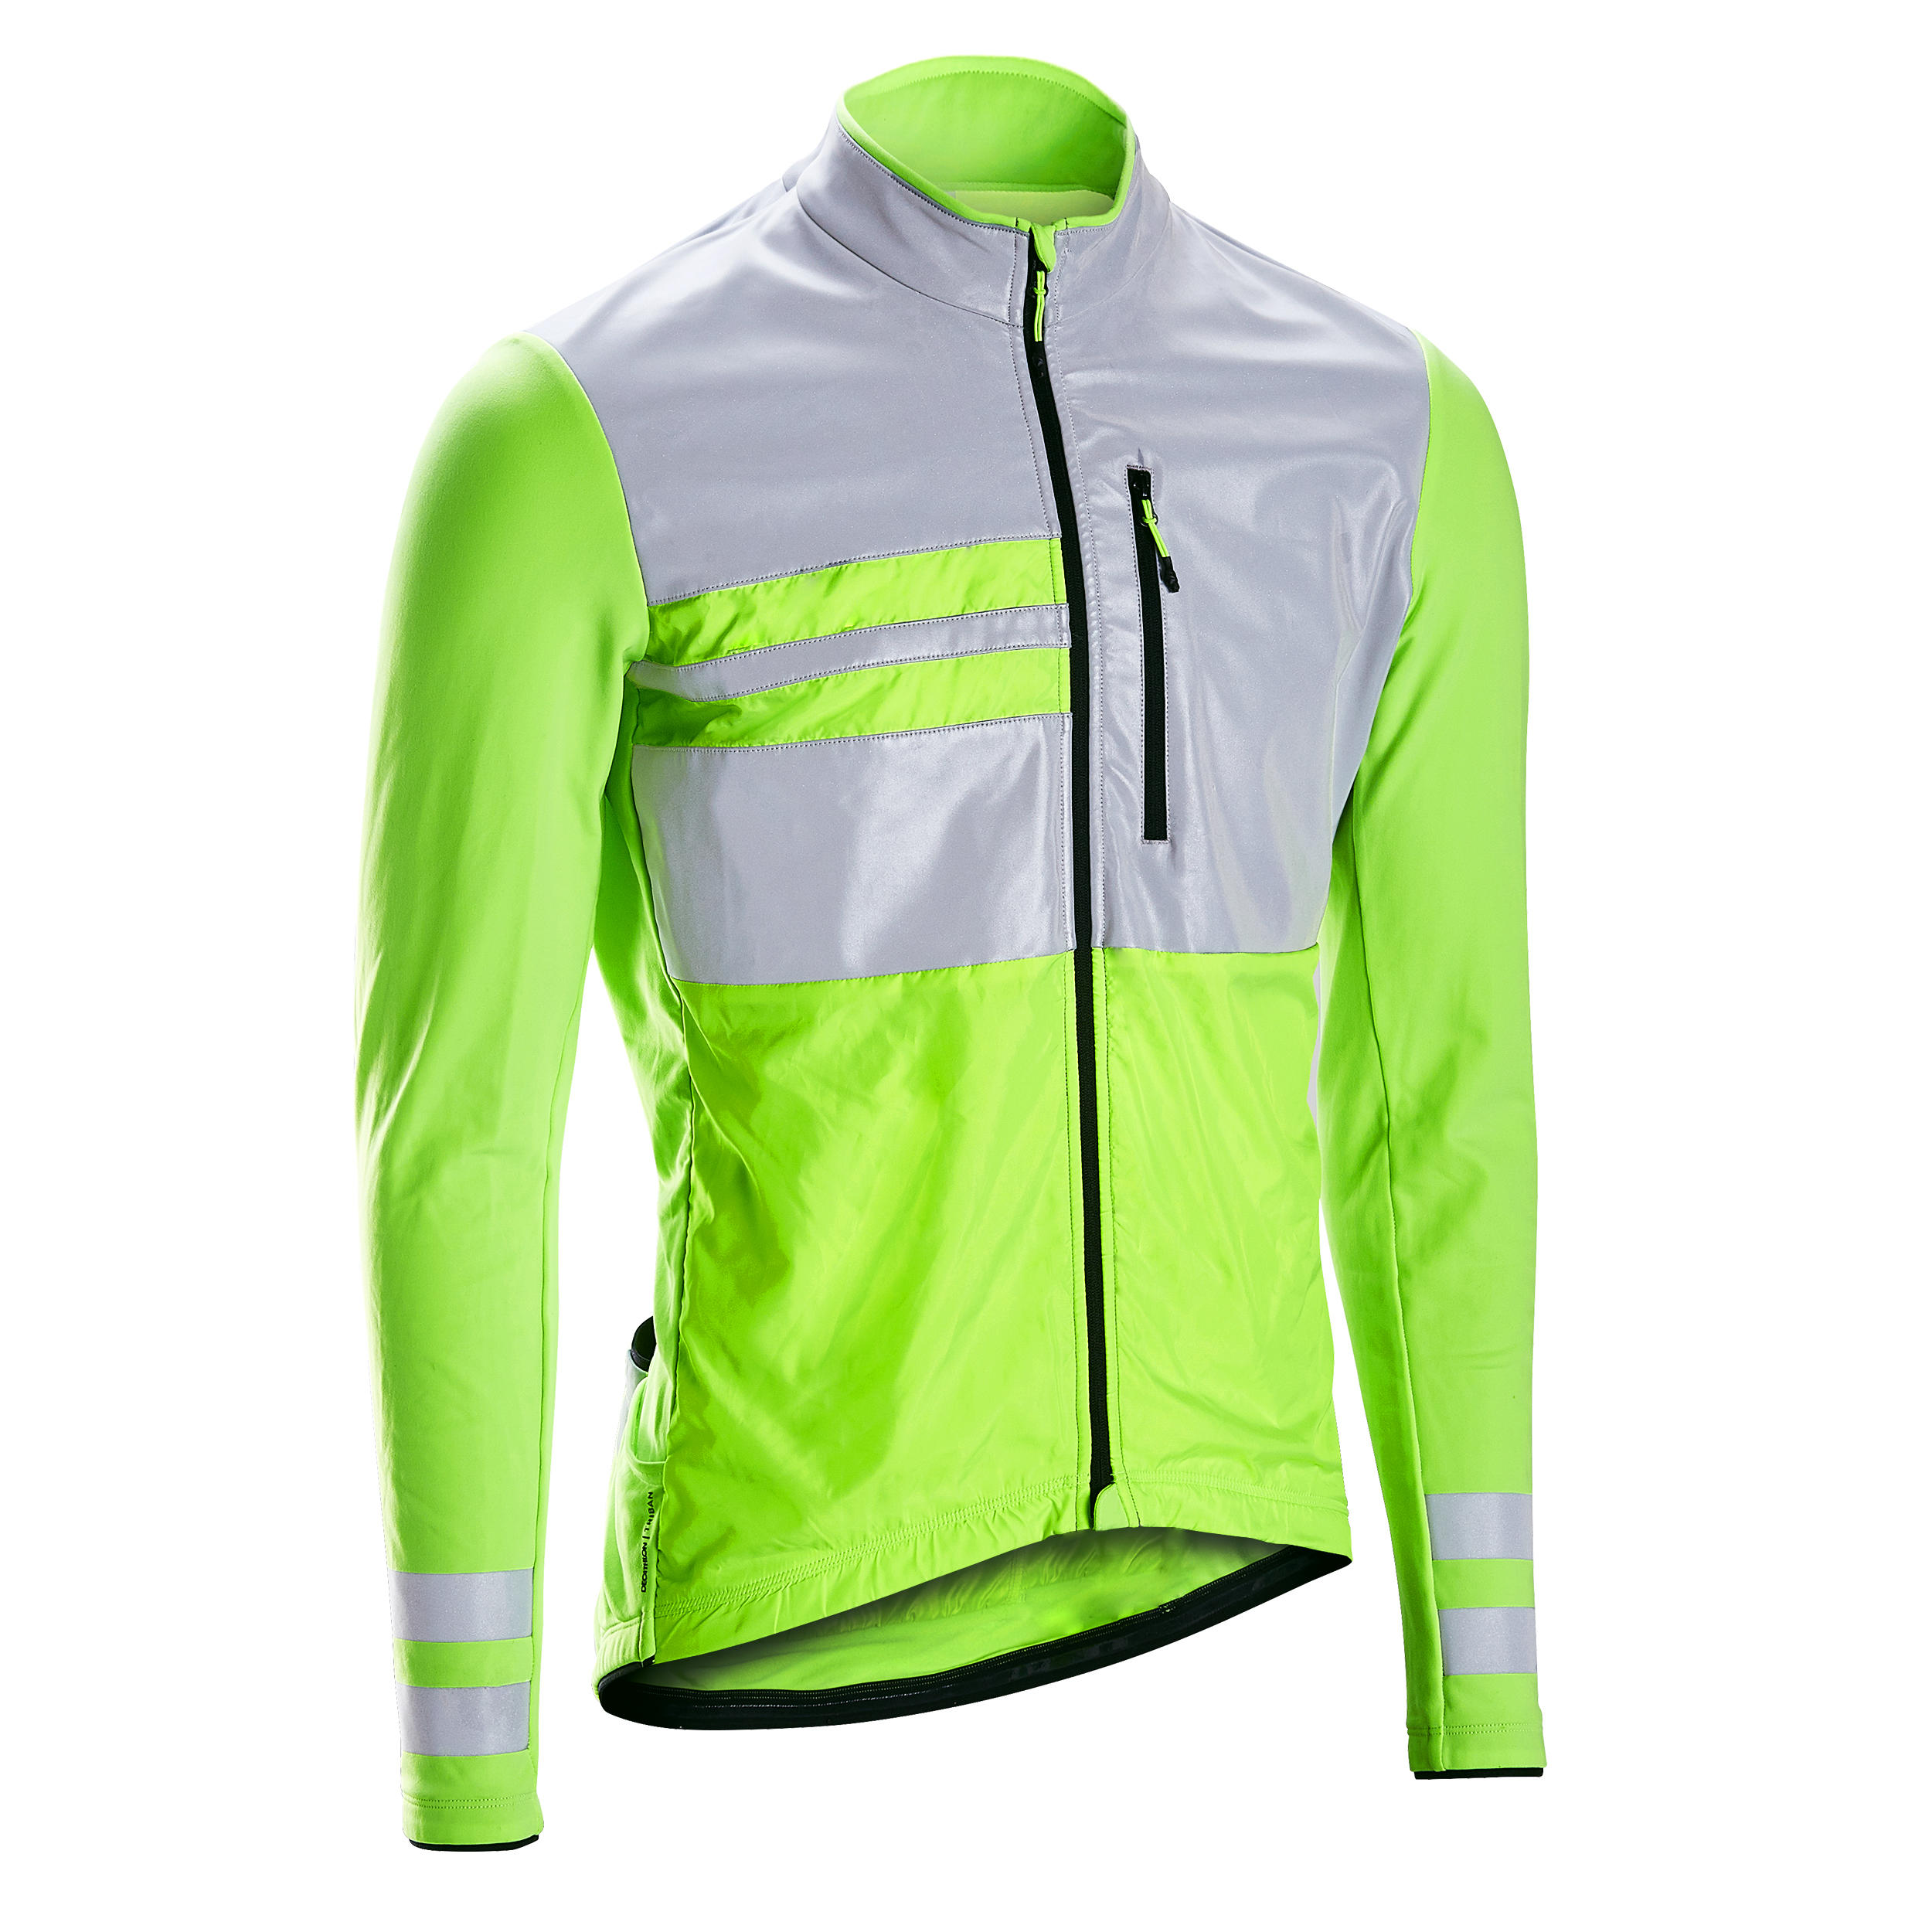 TRIBAN Hi-Vis EN1150 Warm Cycling Jersey RC 500 - Neon Yellow